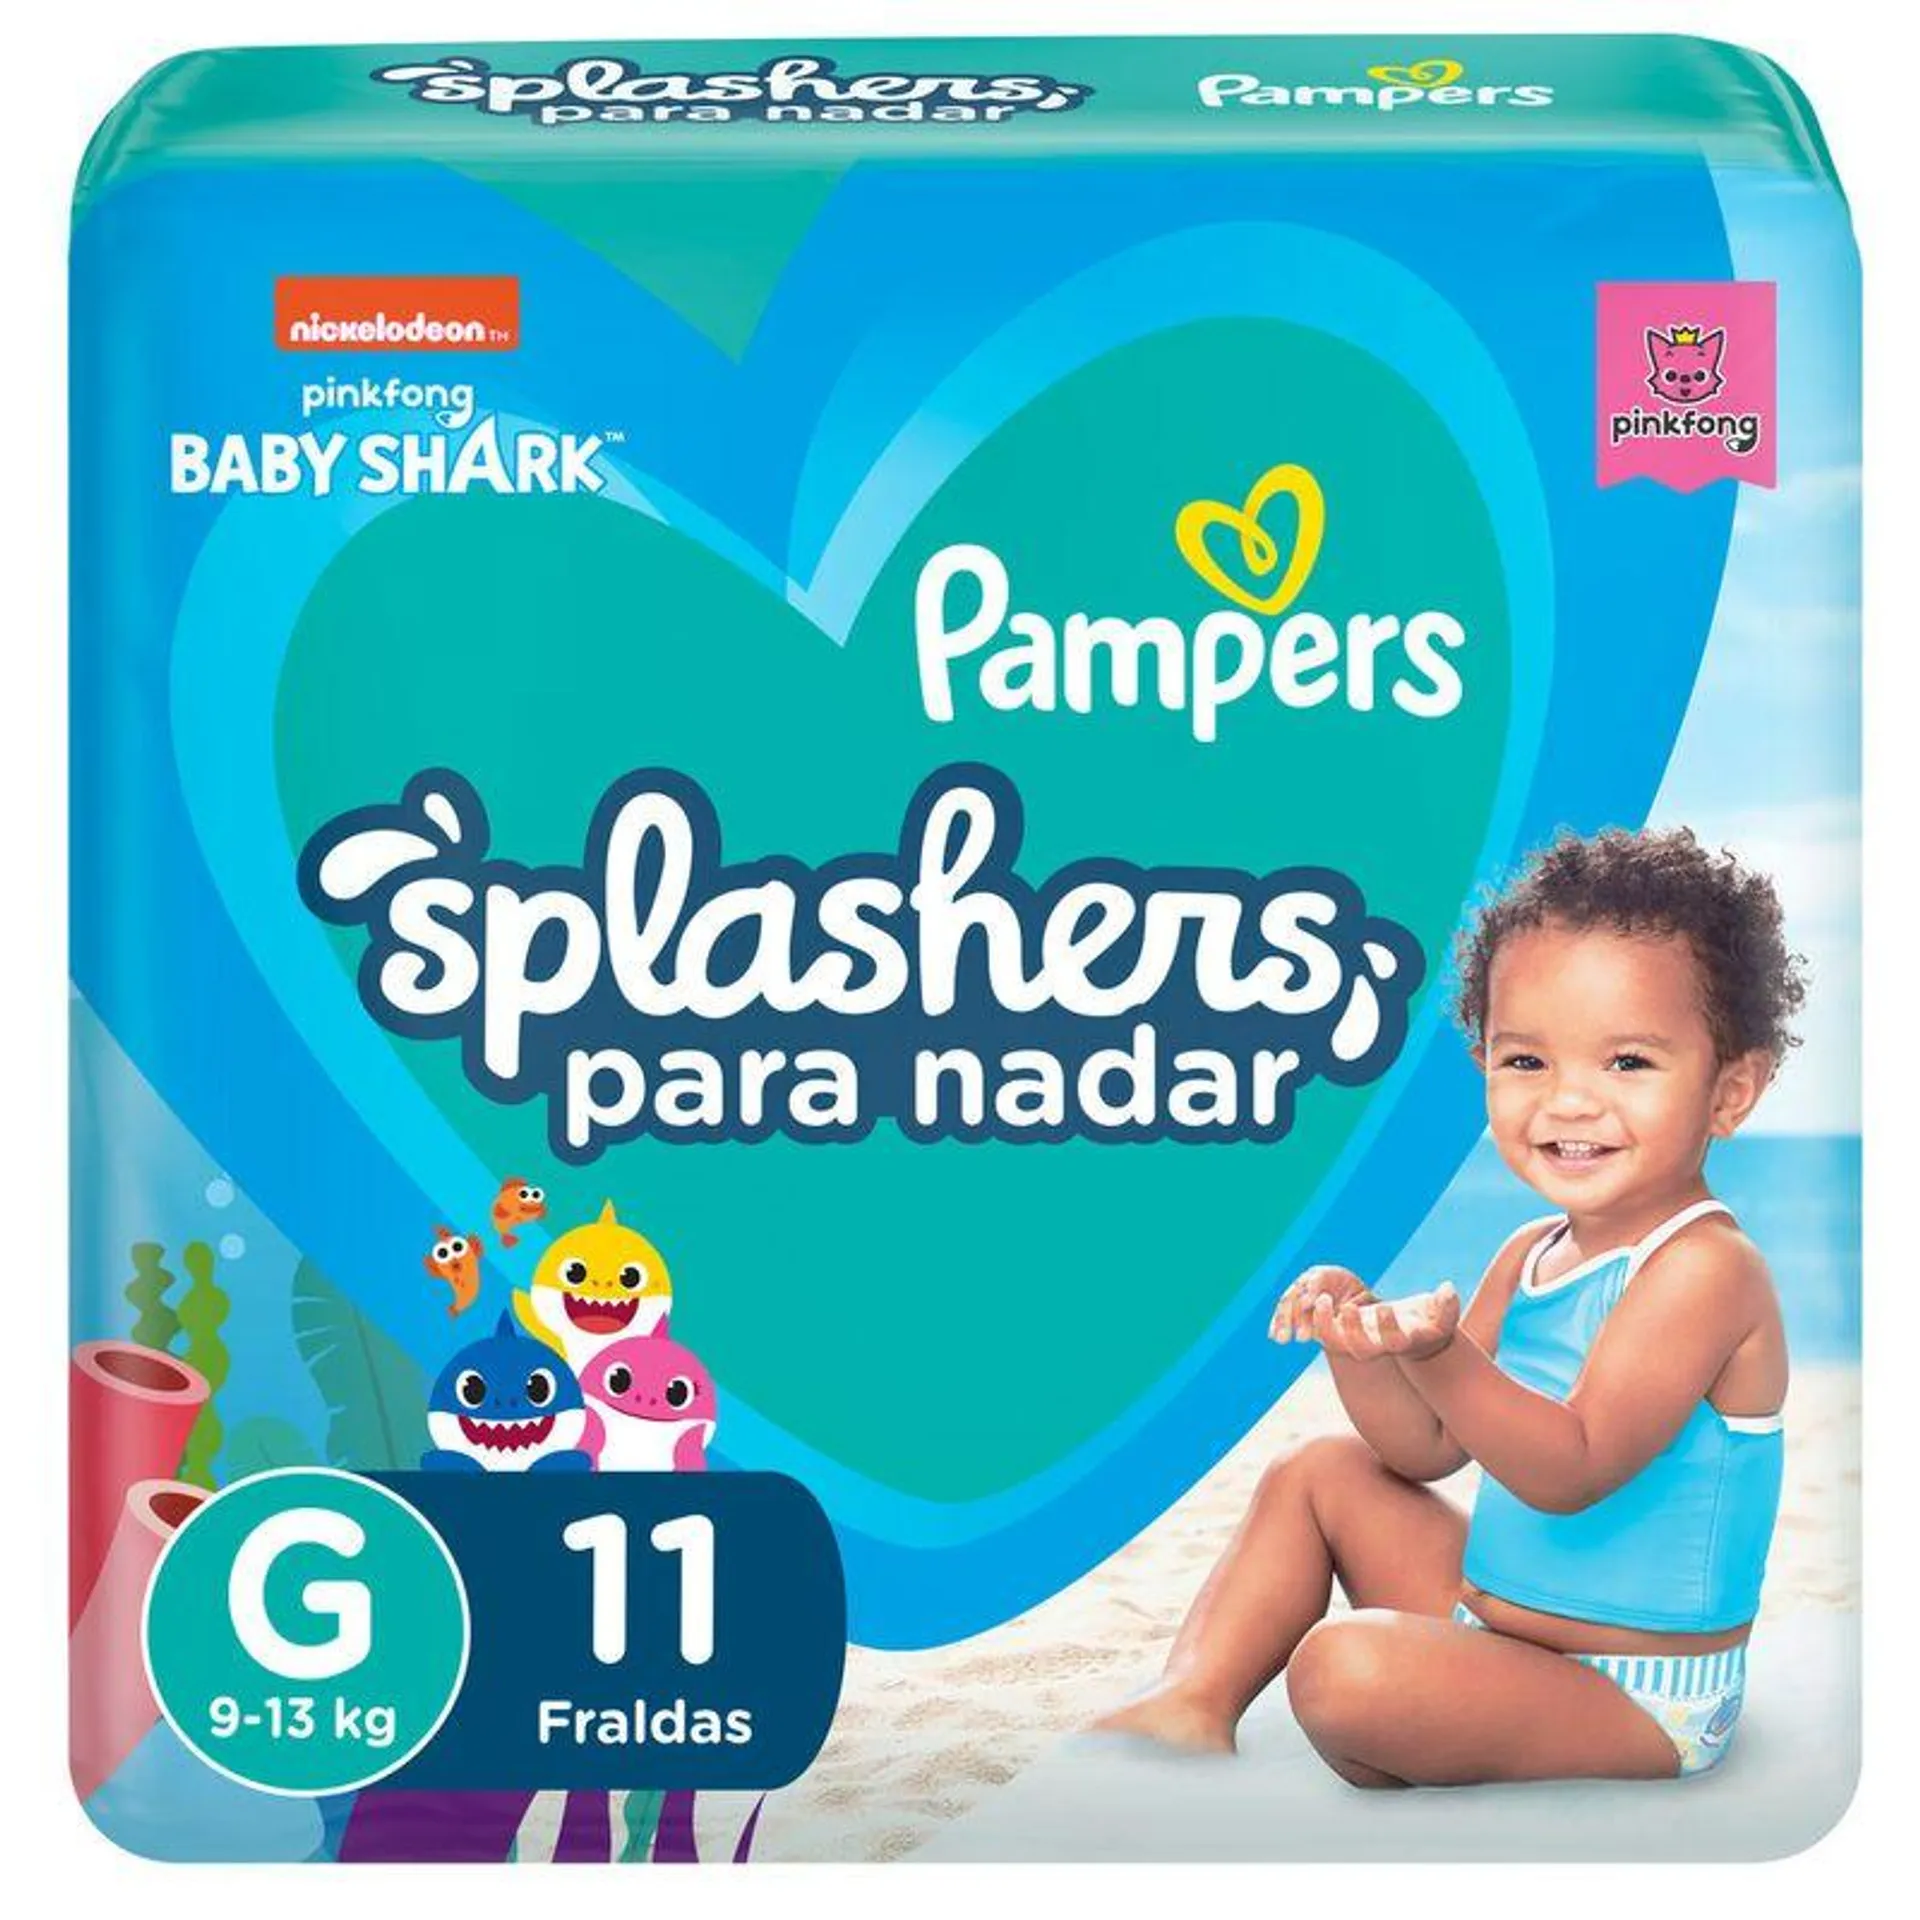 Fralda Pampers Splashers Baby Shark Tamanho M/G Com 11 Unidades